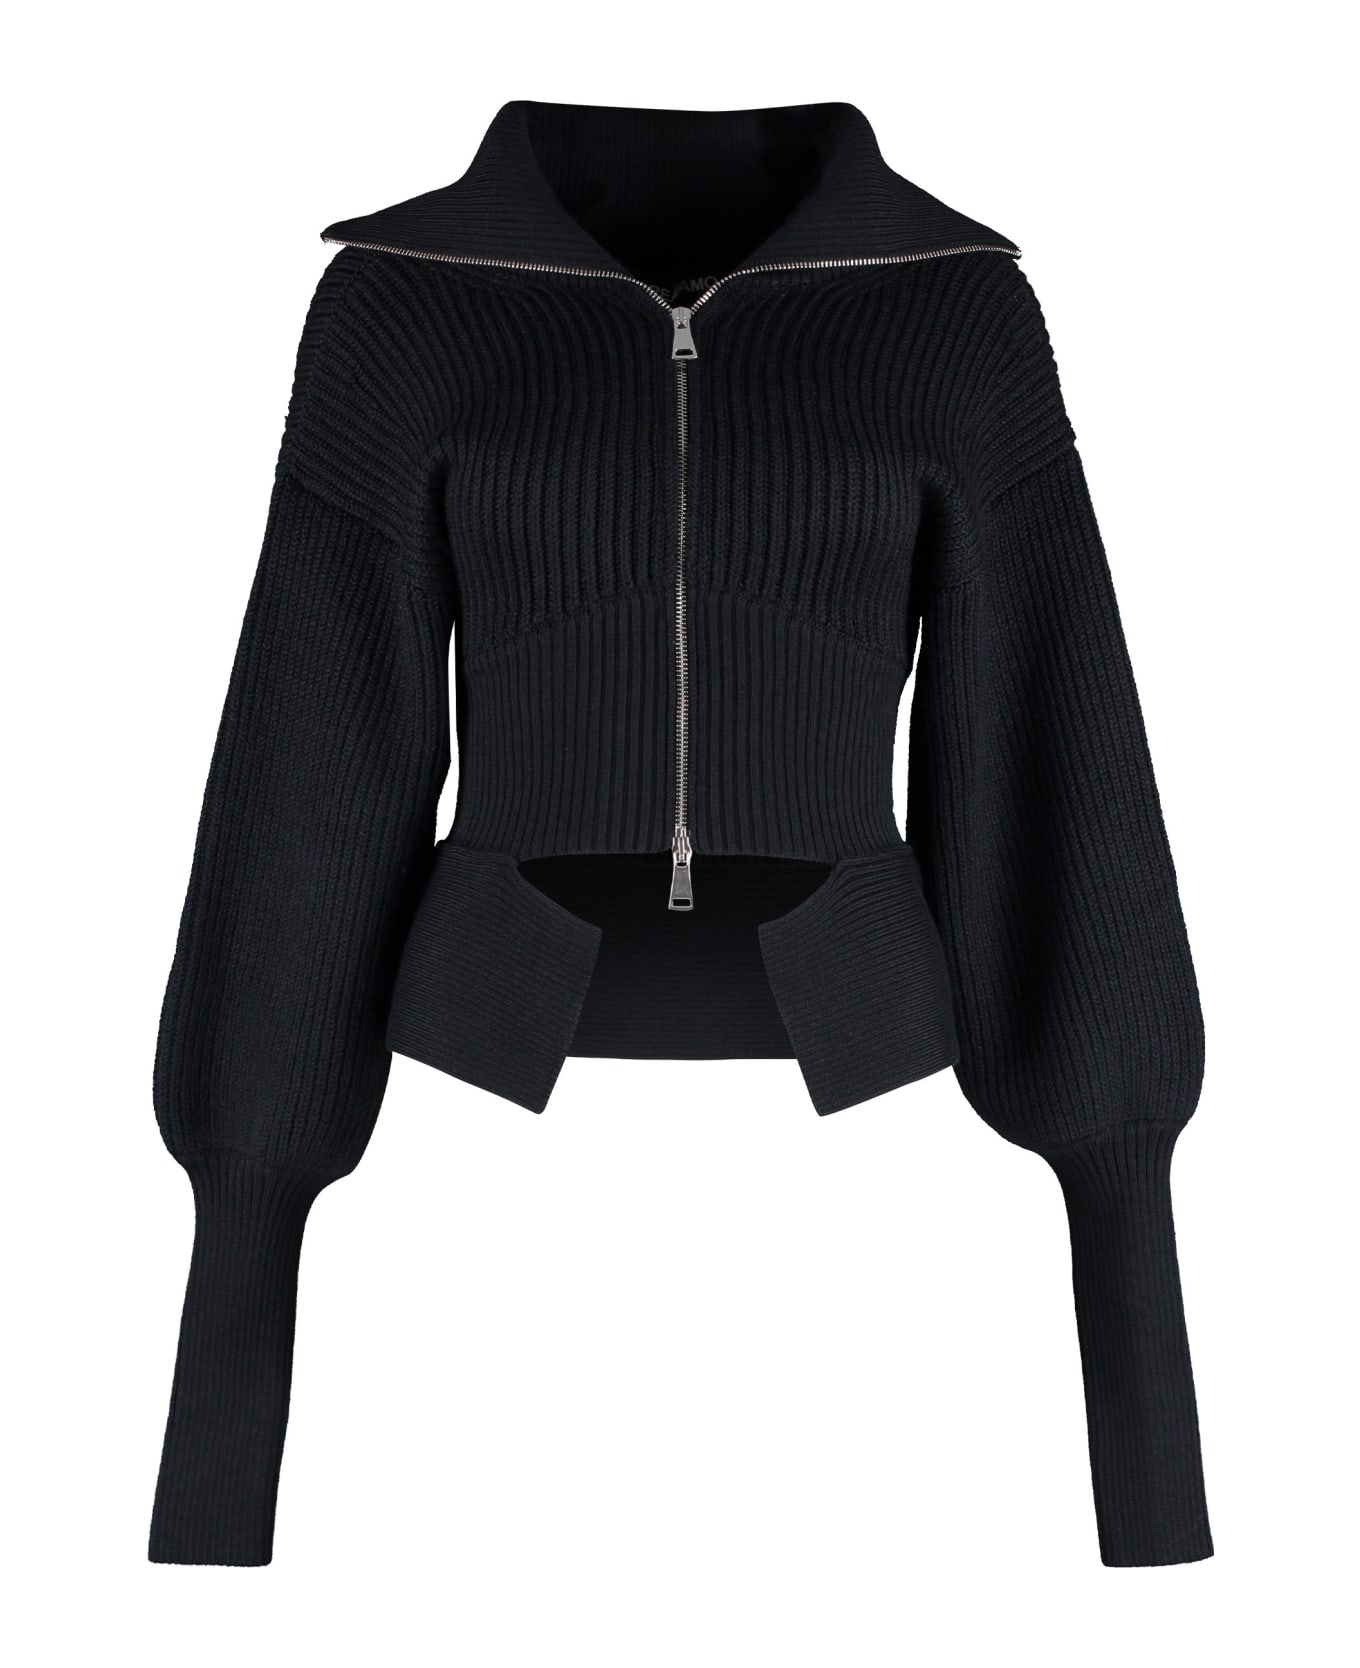 ANDREĀDAMO Turtleneck Merino Wool Sweater - black